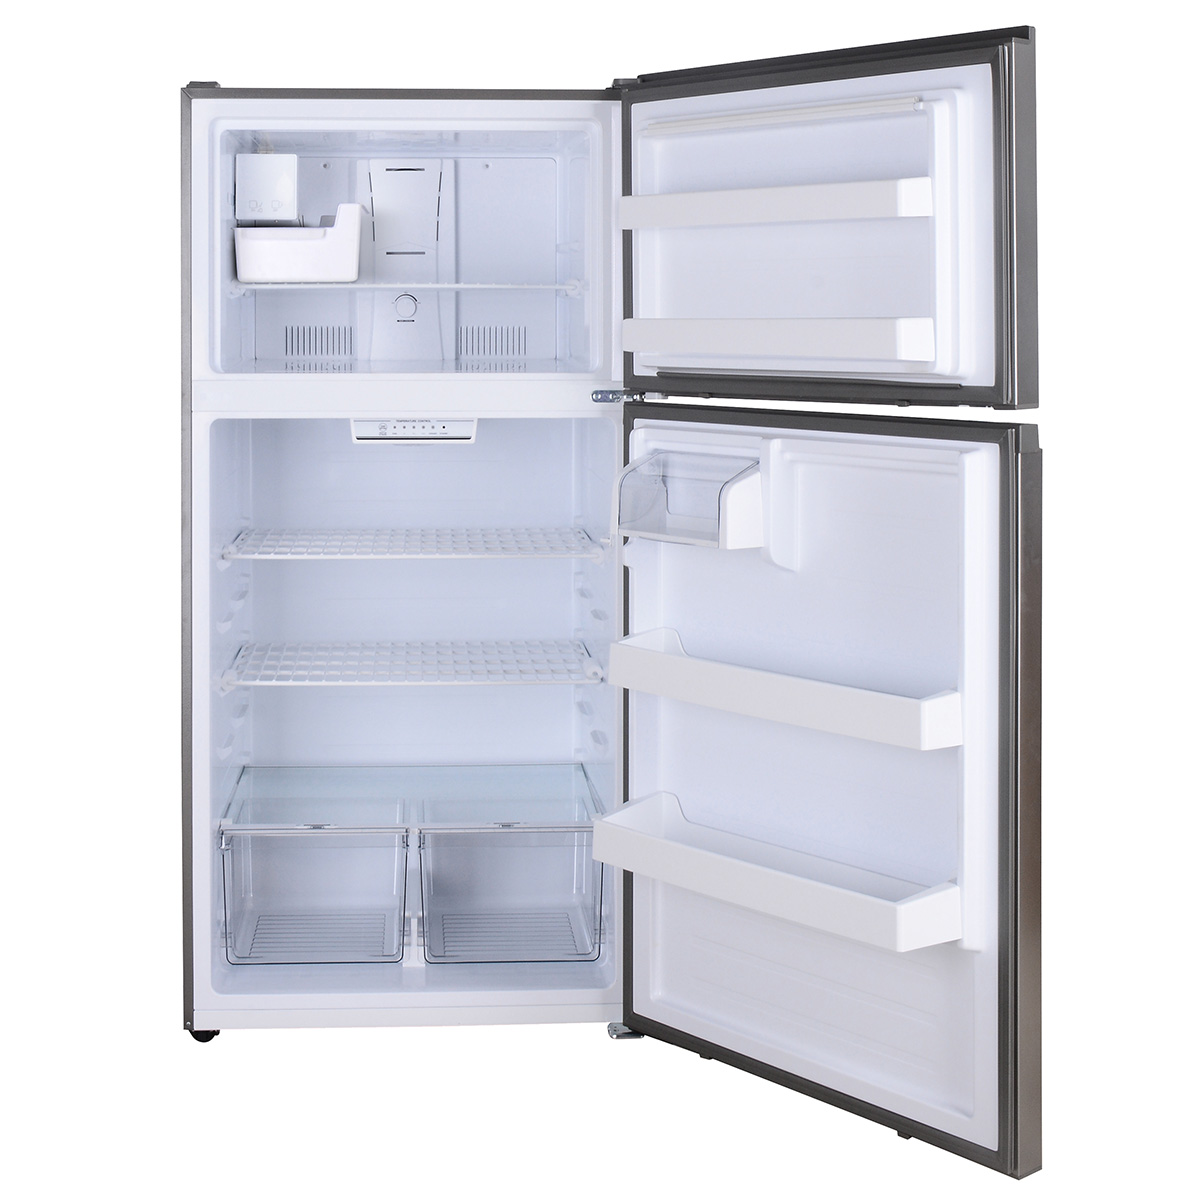 Premium Levella Refrigerator - 18.1 cu ft Upright Freezer with Ice Maker